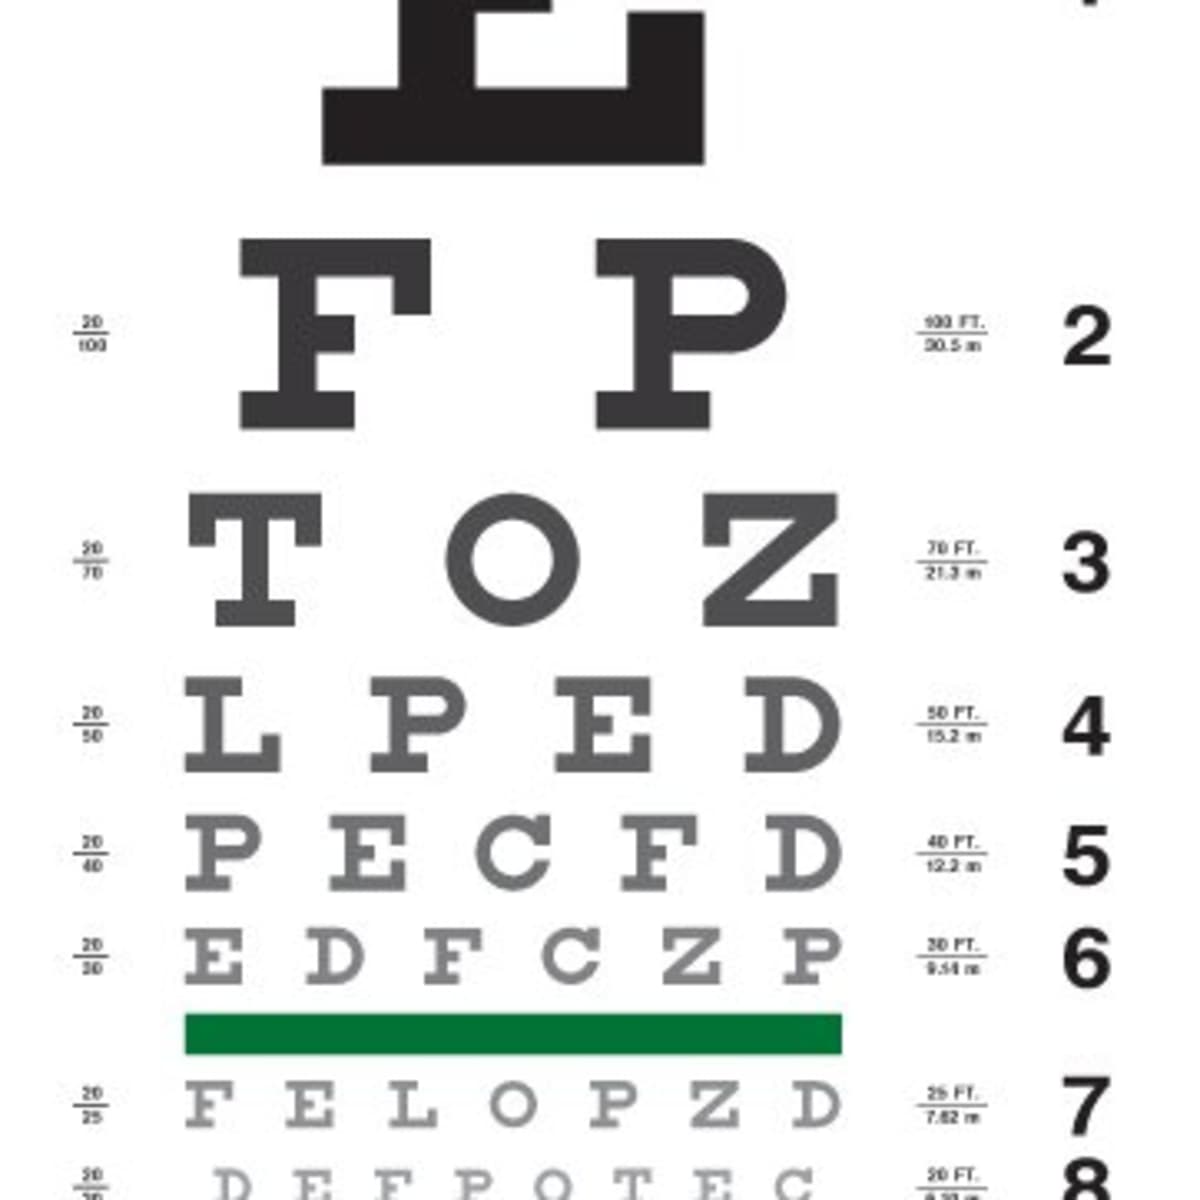 Eye Exam Secret - HubPages